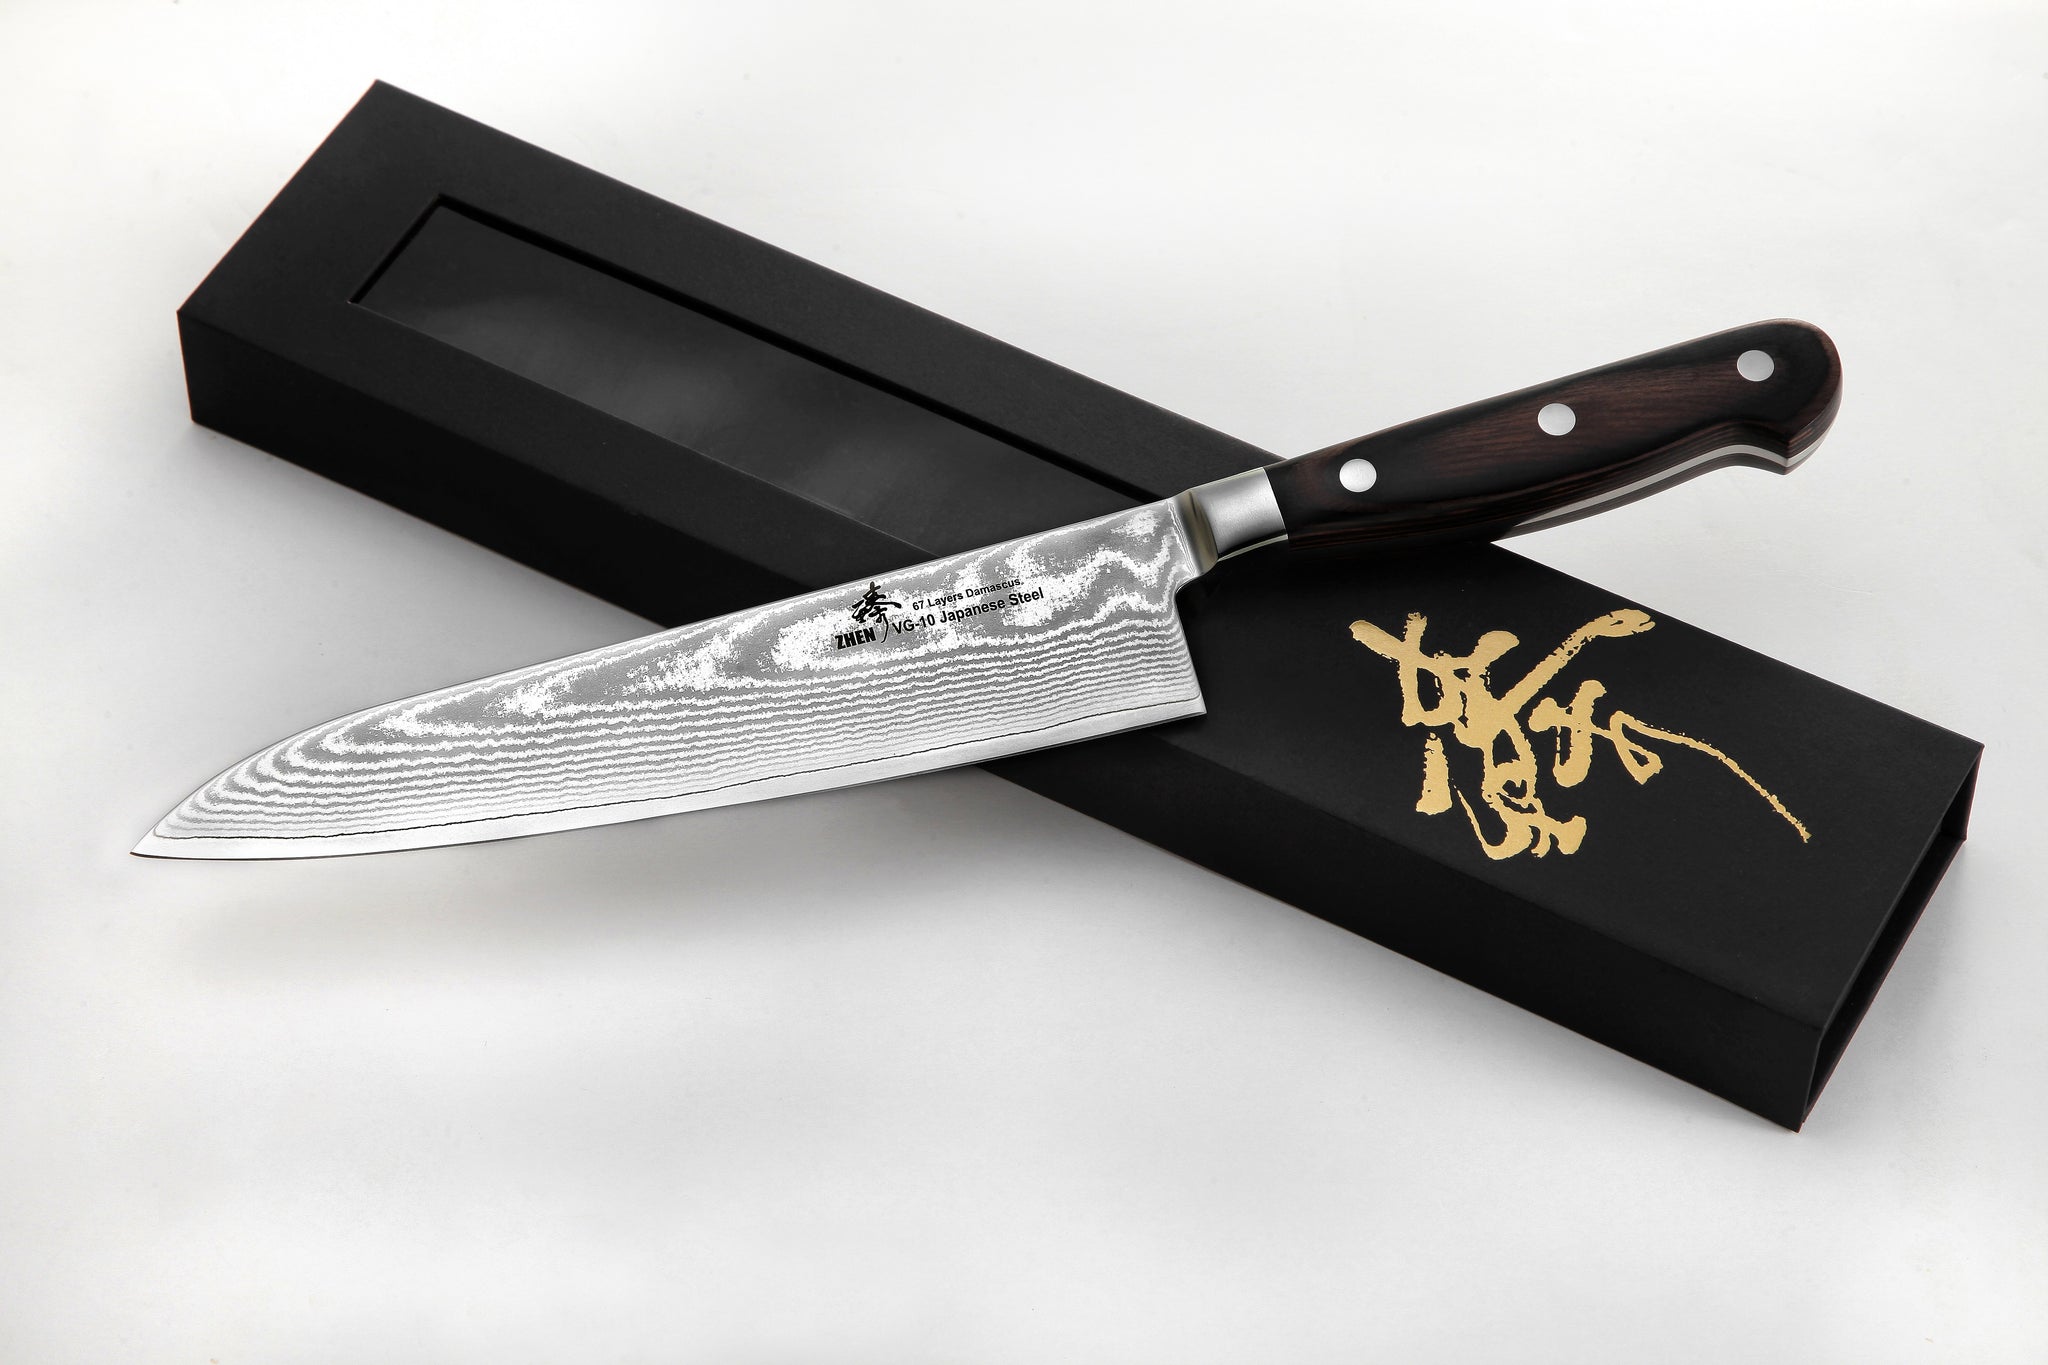 Professional Japanese 67 Layers Damascus Steel Kitchen Knife Set